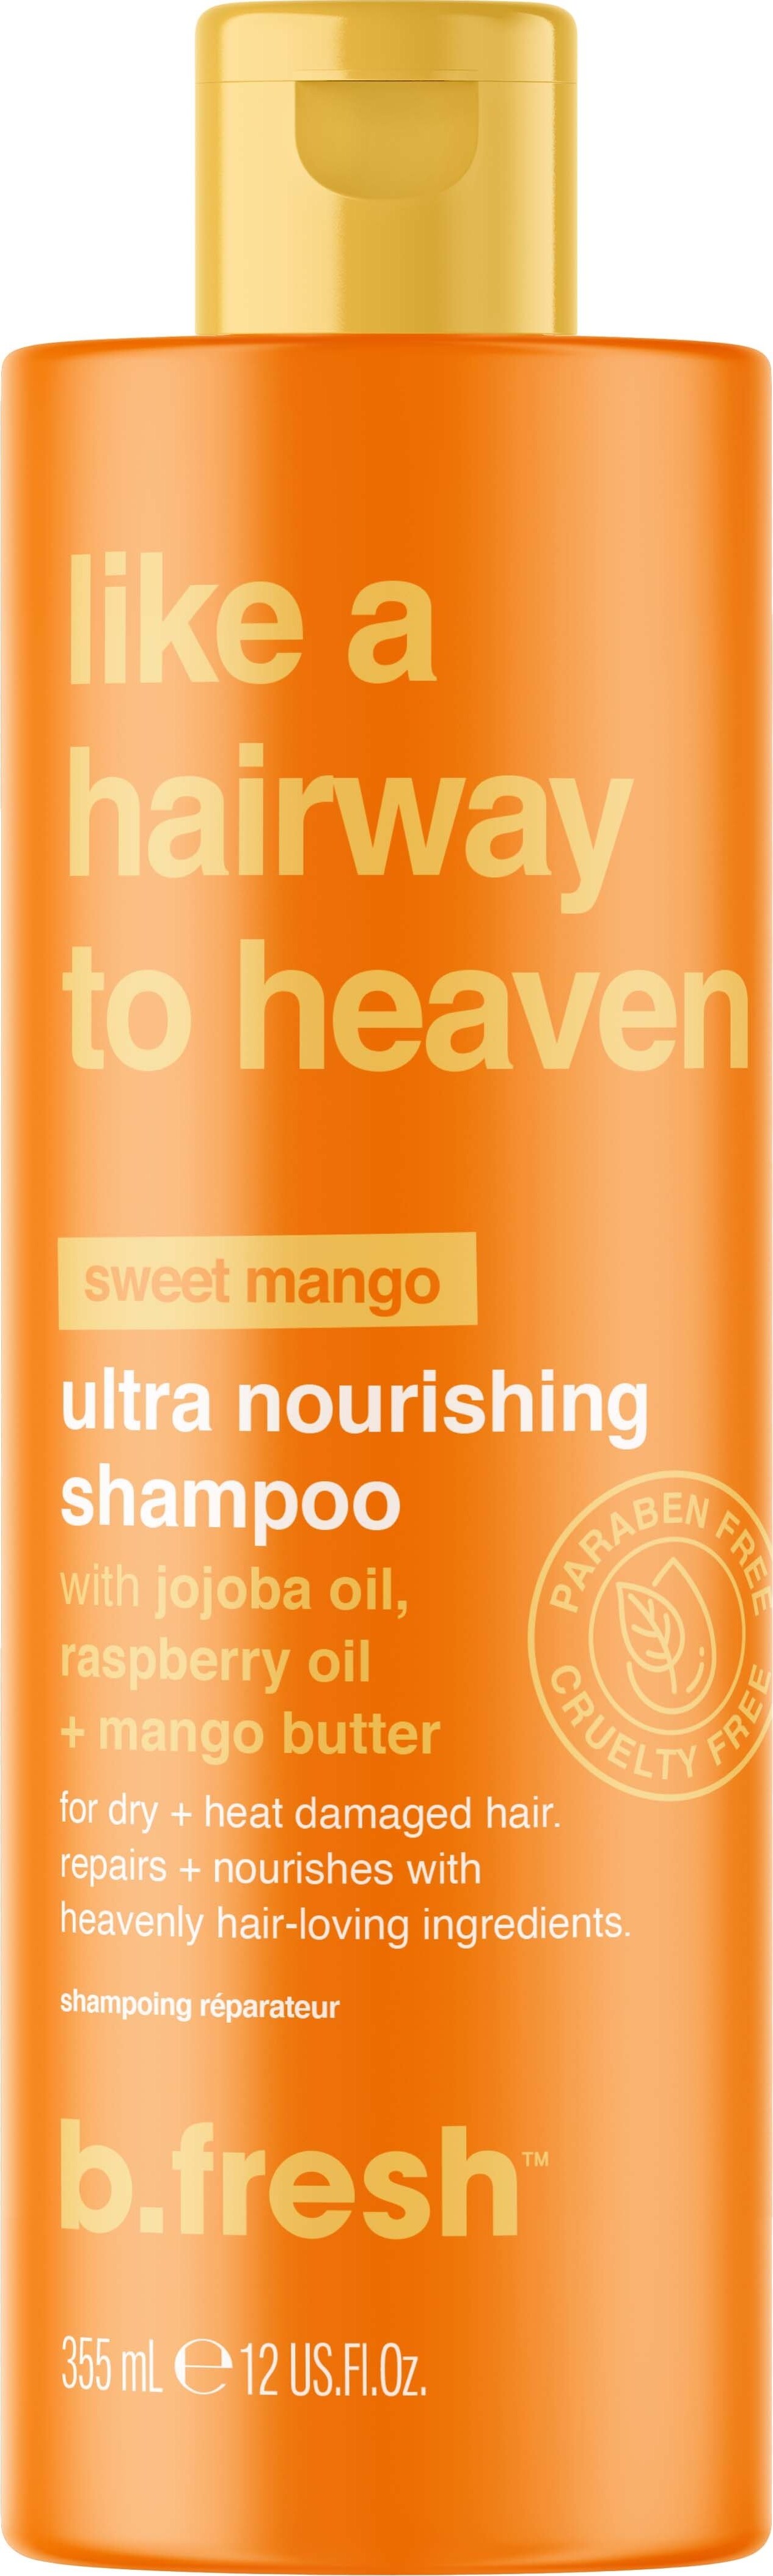 B.fresh - Like A Hairway To Heaven Ultra Nourishing Shampoo 355 Ml